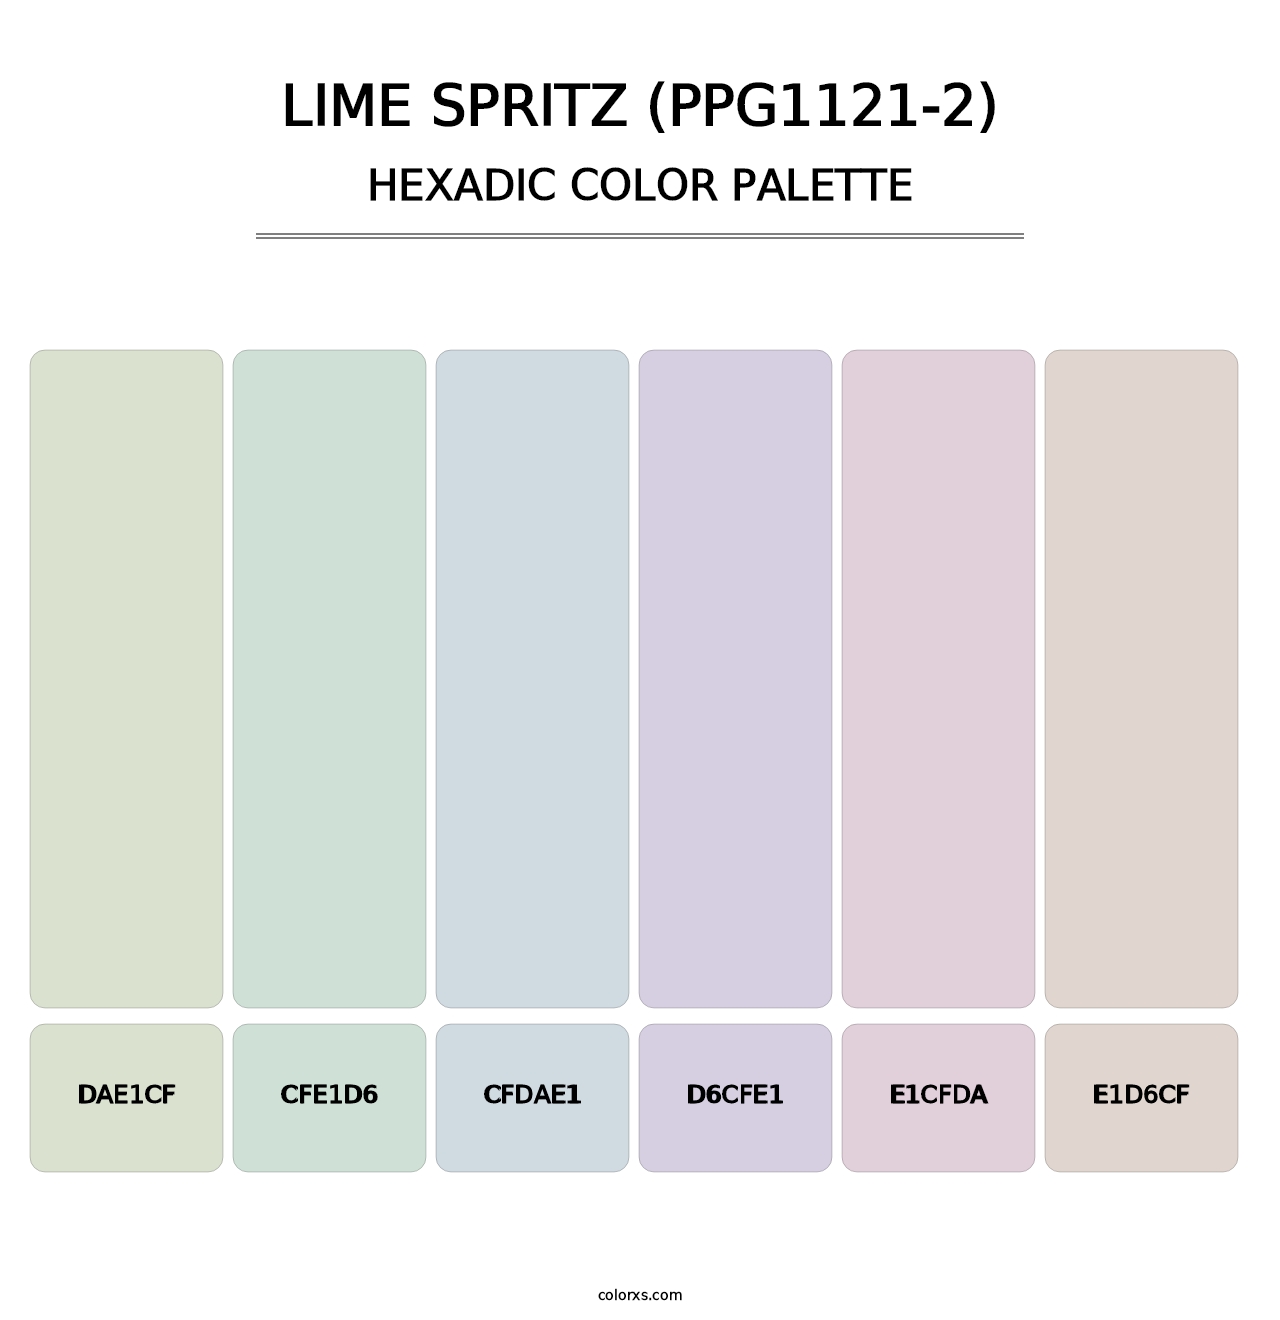 Lime Spritz (PPG1121-2) - Hexadic Color Palette